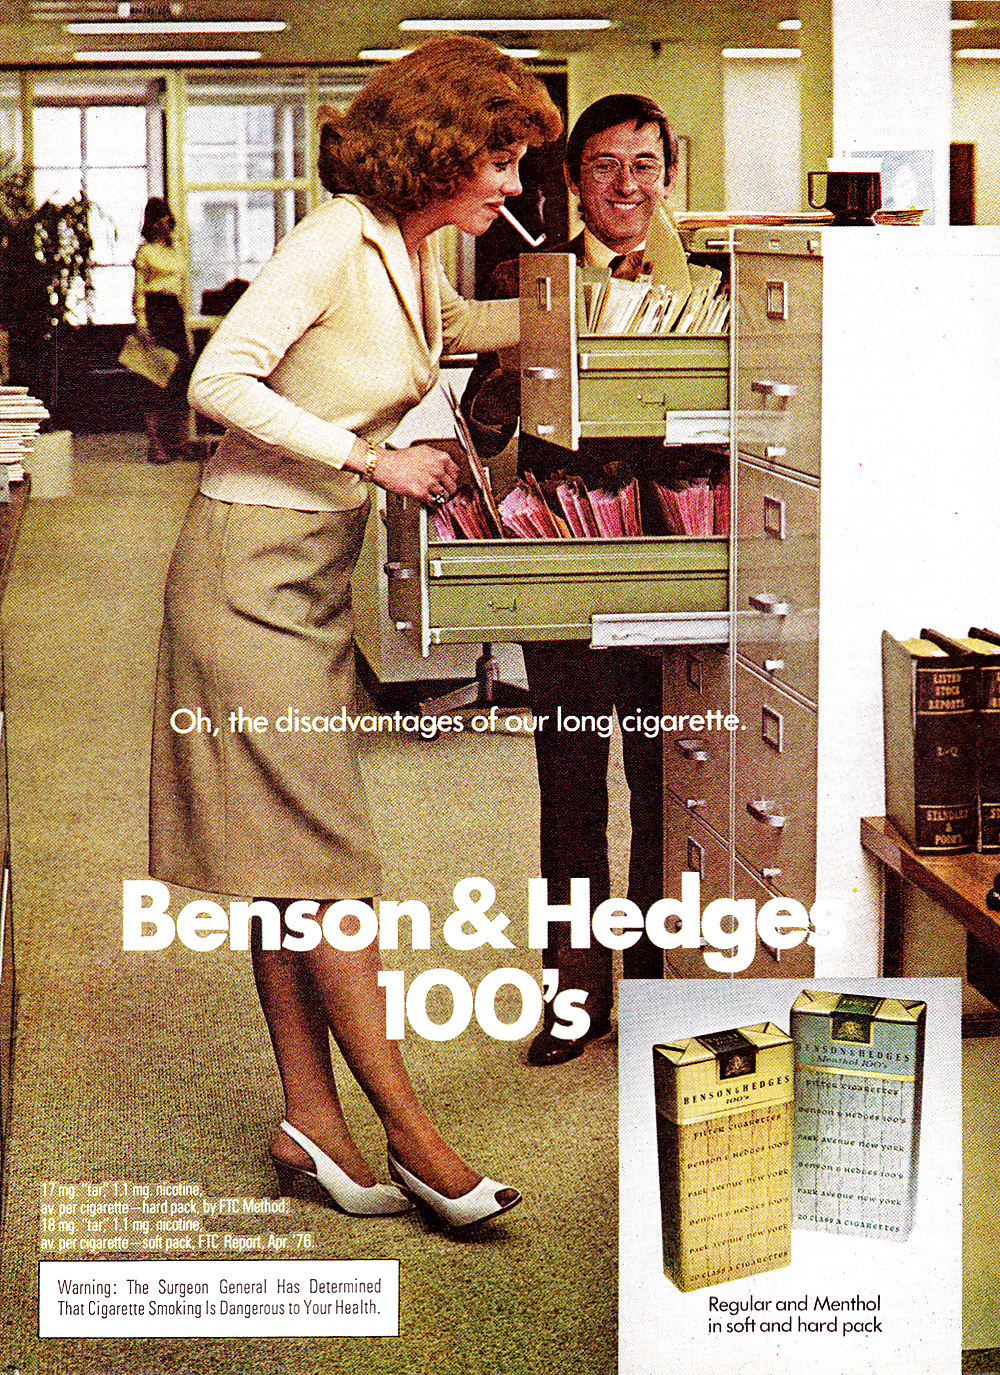 Benson & Hedges 100's are Delicious #37352772